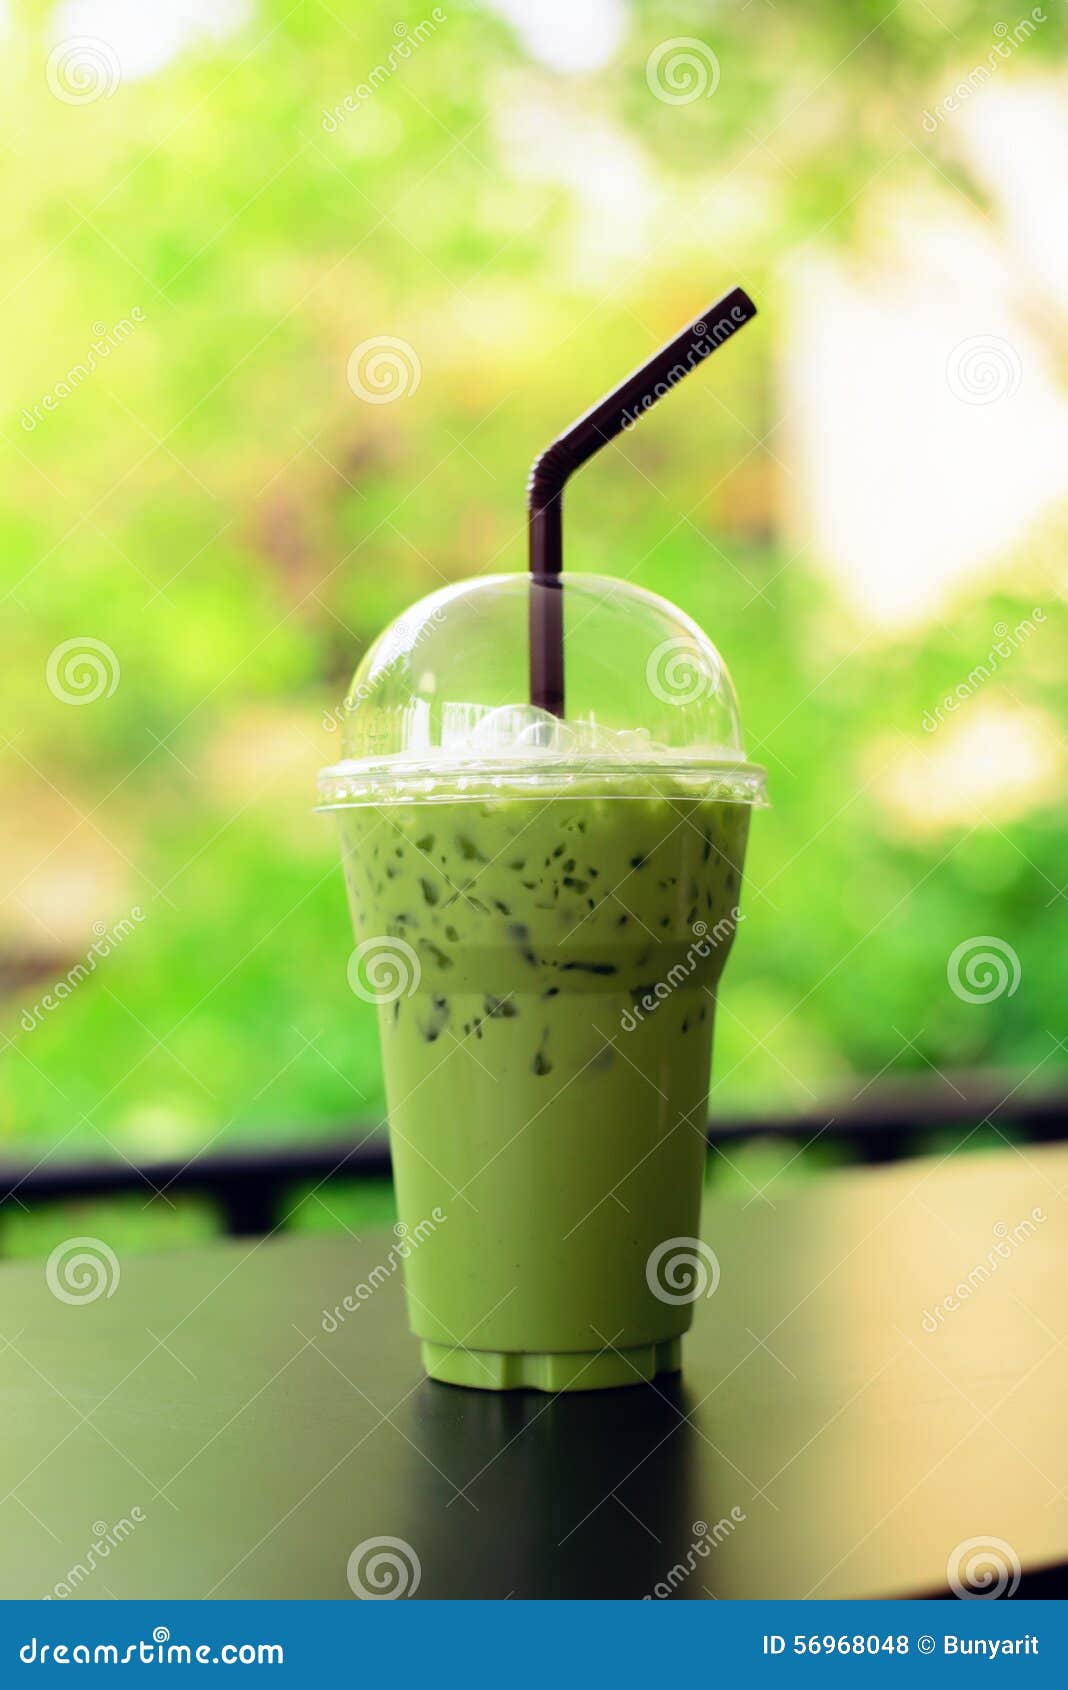 matcha green tea latte clod on wooden table background